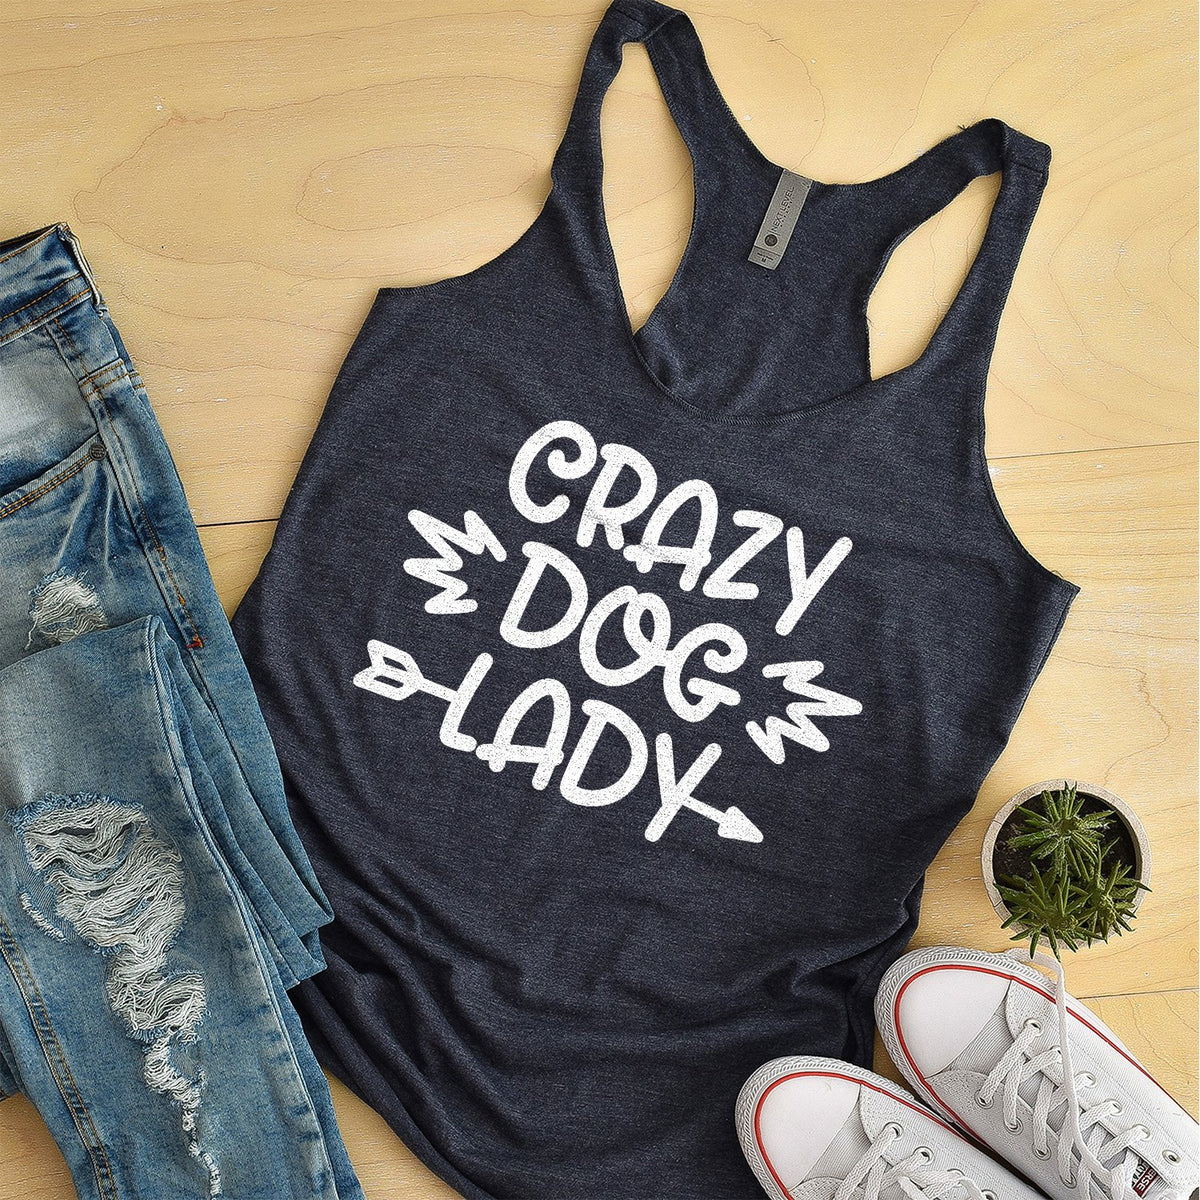 Crazy Dog Lady - Tank Top Racerback